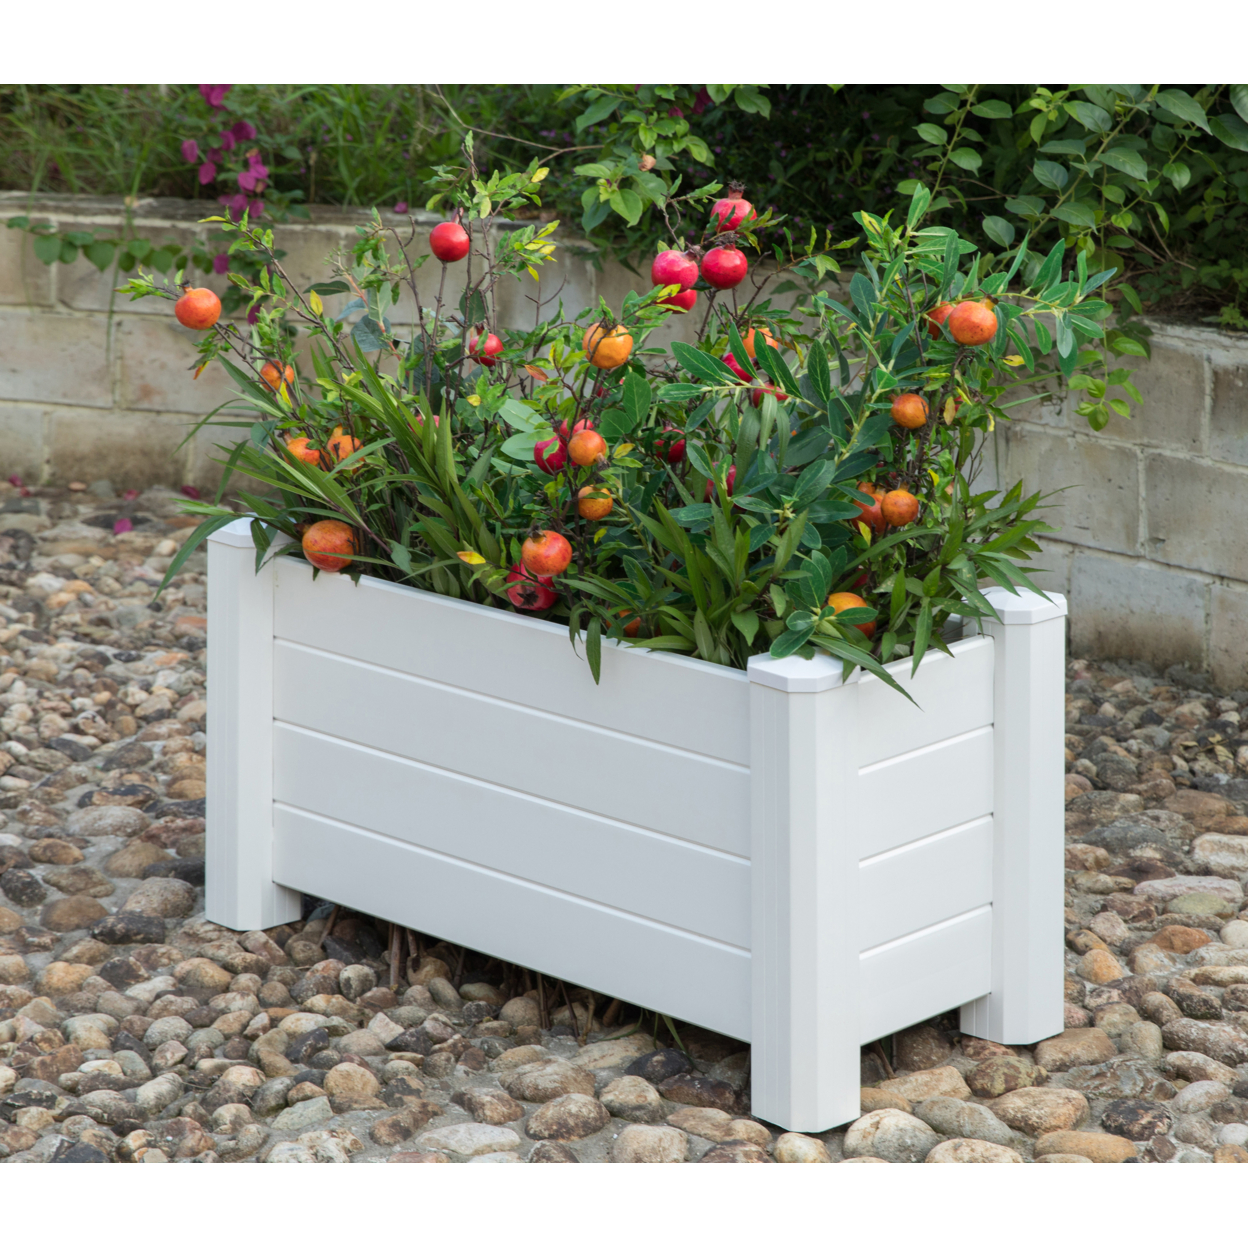 Gardenised White Vinyl Traditional Fence Design Garden Bed Elevated Screwless Raised Planter Box - 15.75 x 35.5